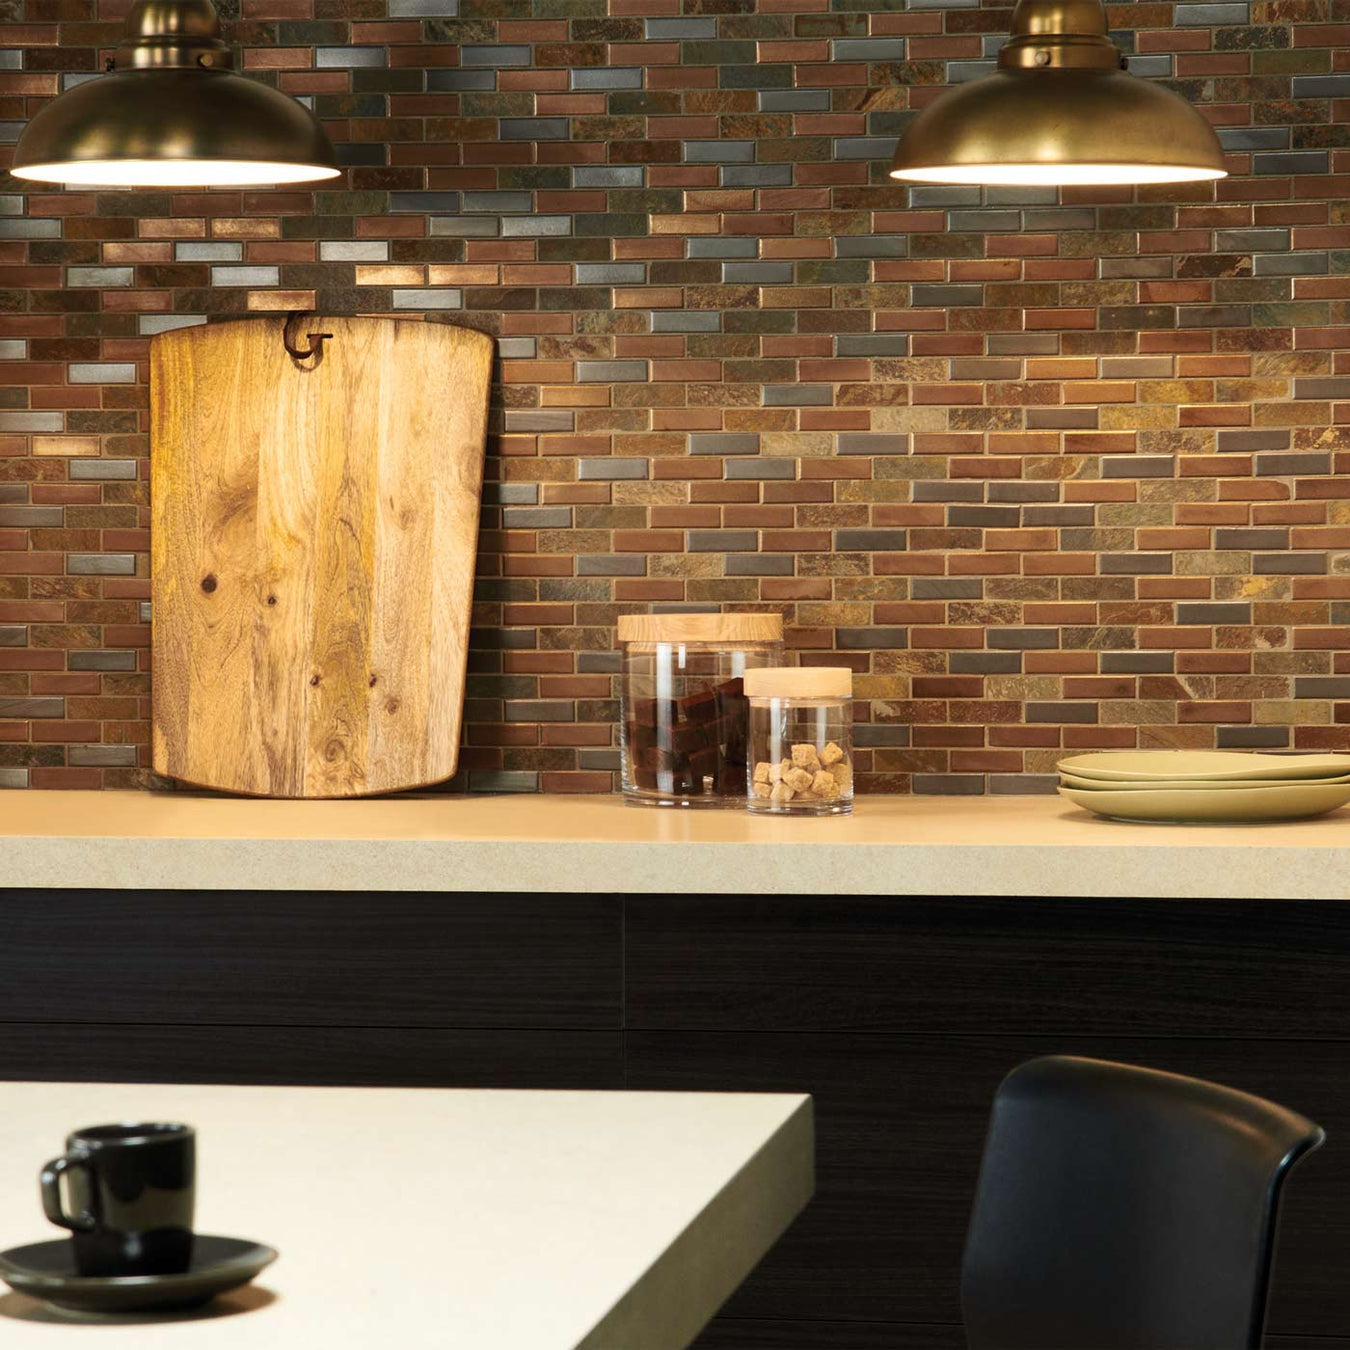 Brown kitchen tiles